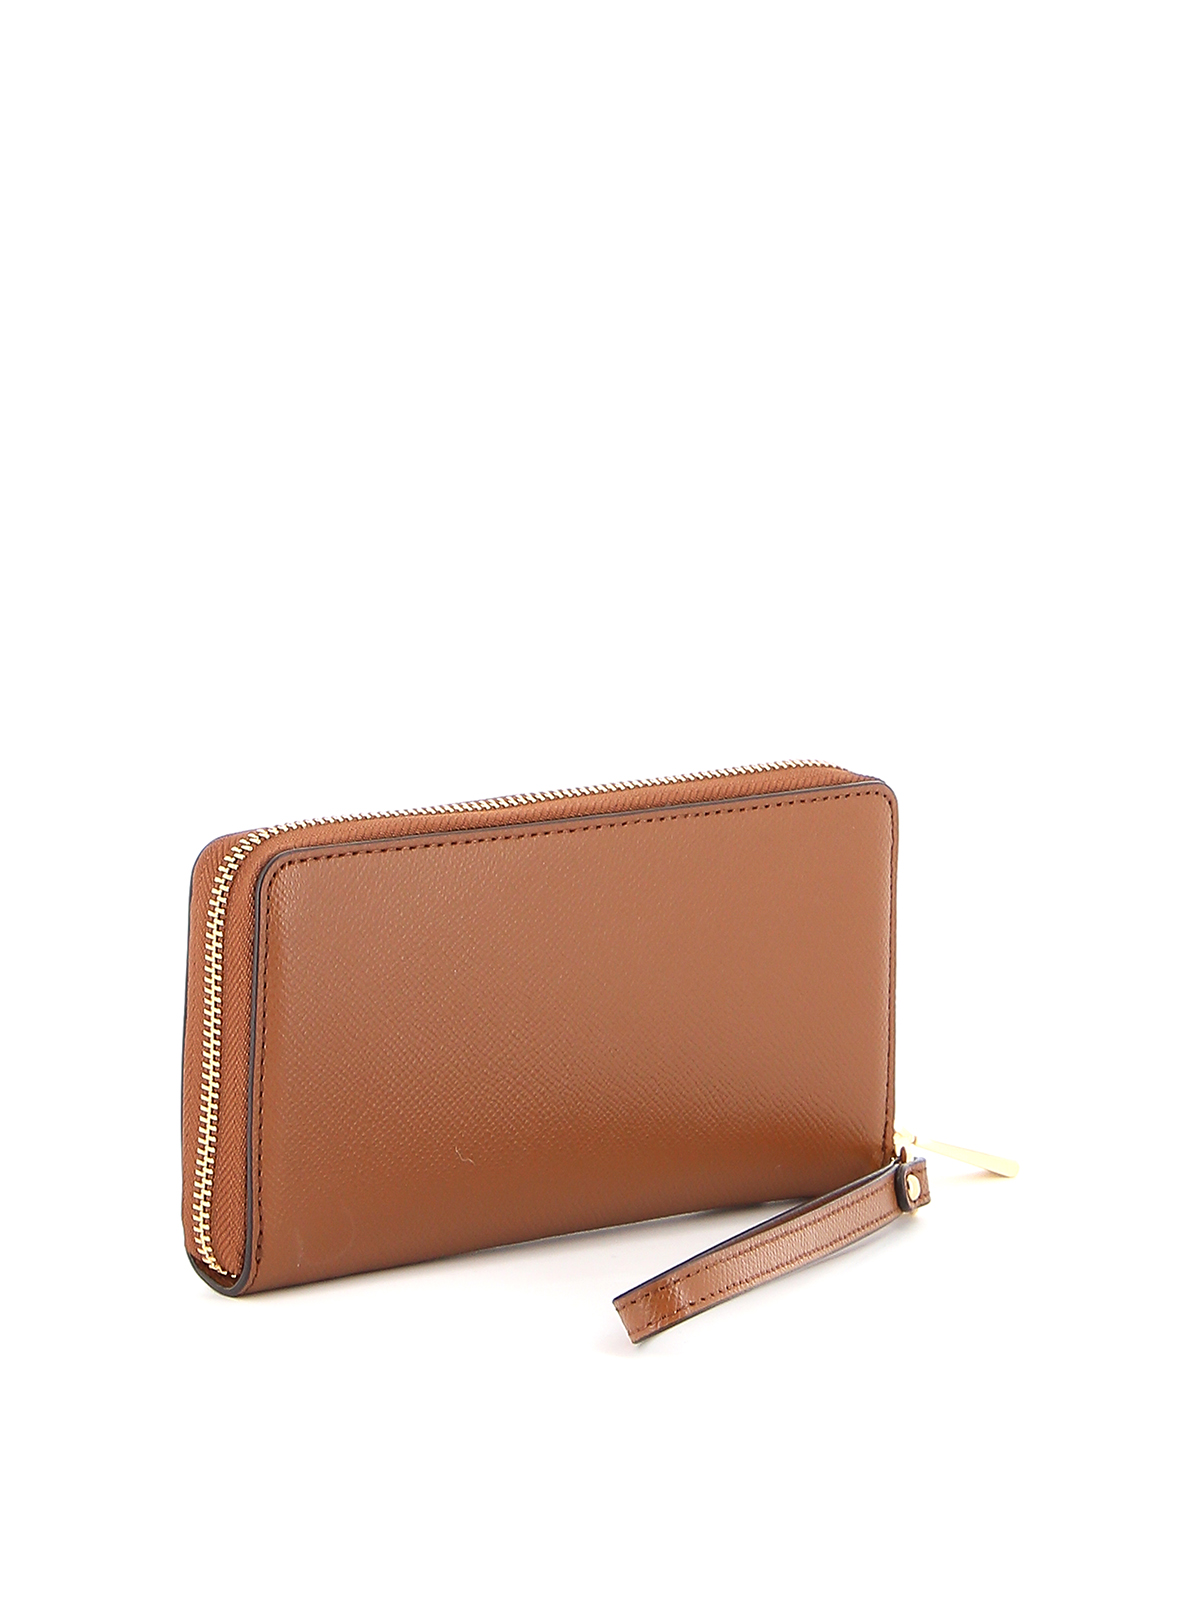 Wallets & purses Michael Kors - Jet Set small monogram wallet -  34H9GJ6D0B252